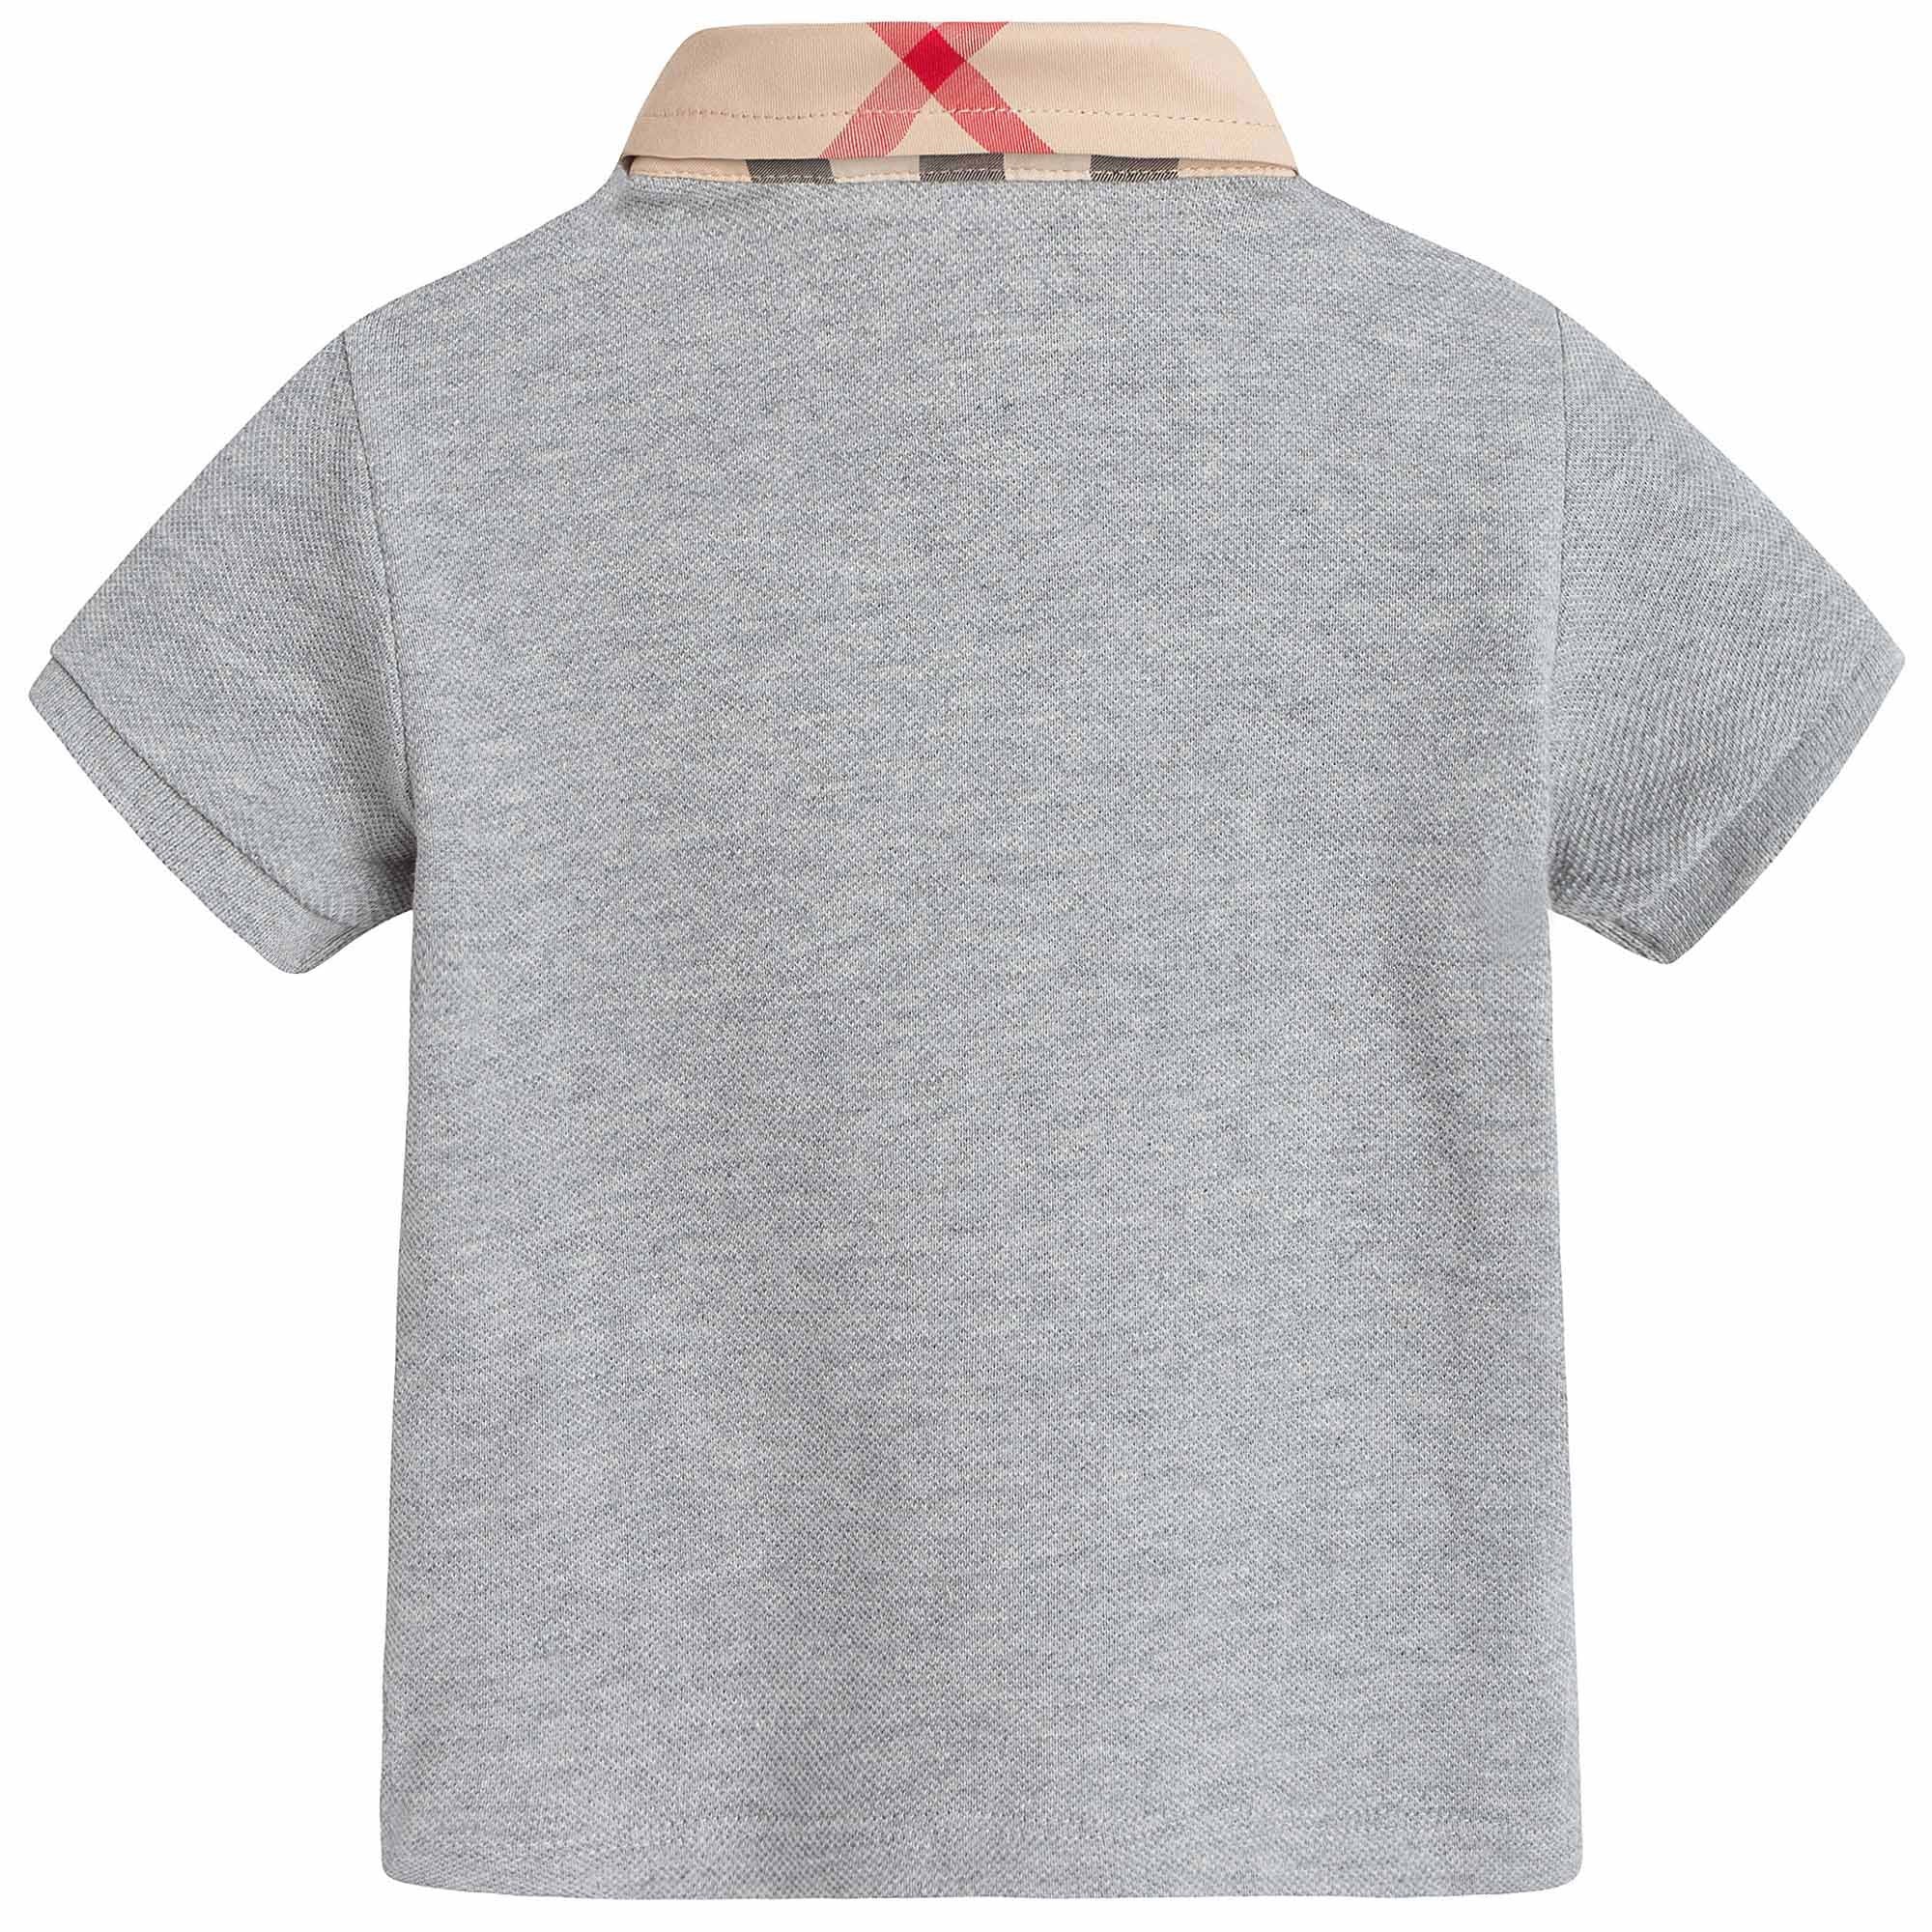 Boys Grey Polo Shirt With Check Collar - CÉMAROSE | Children's Fashion Store - 2